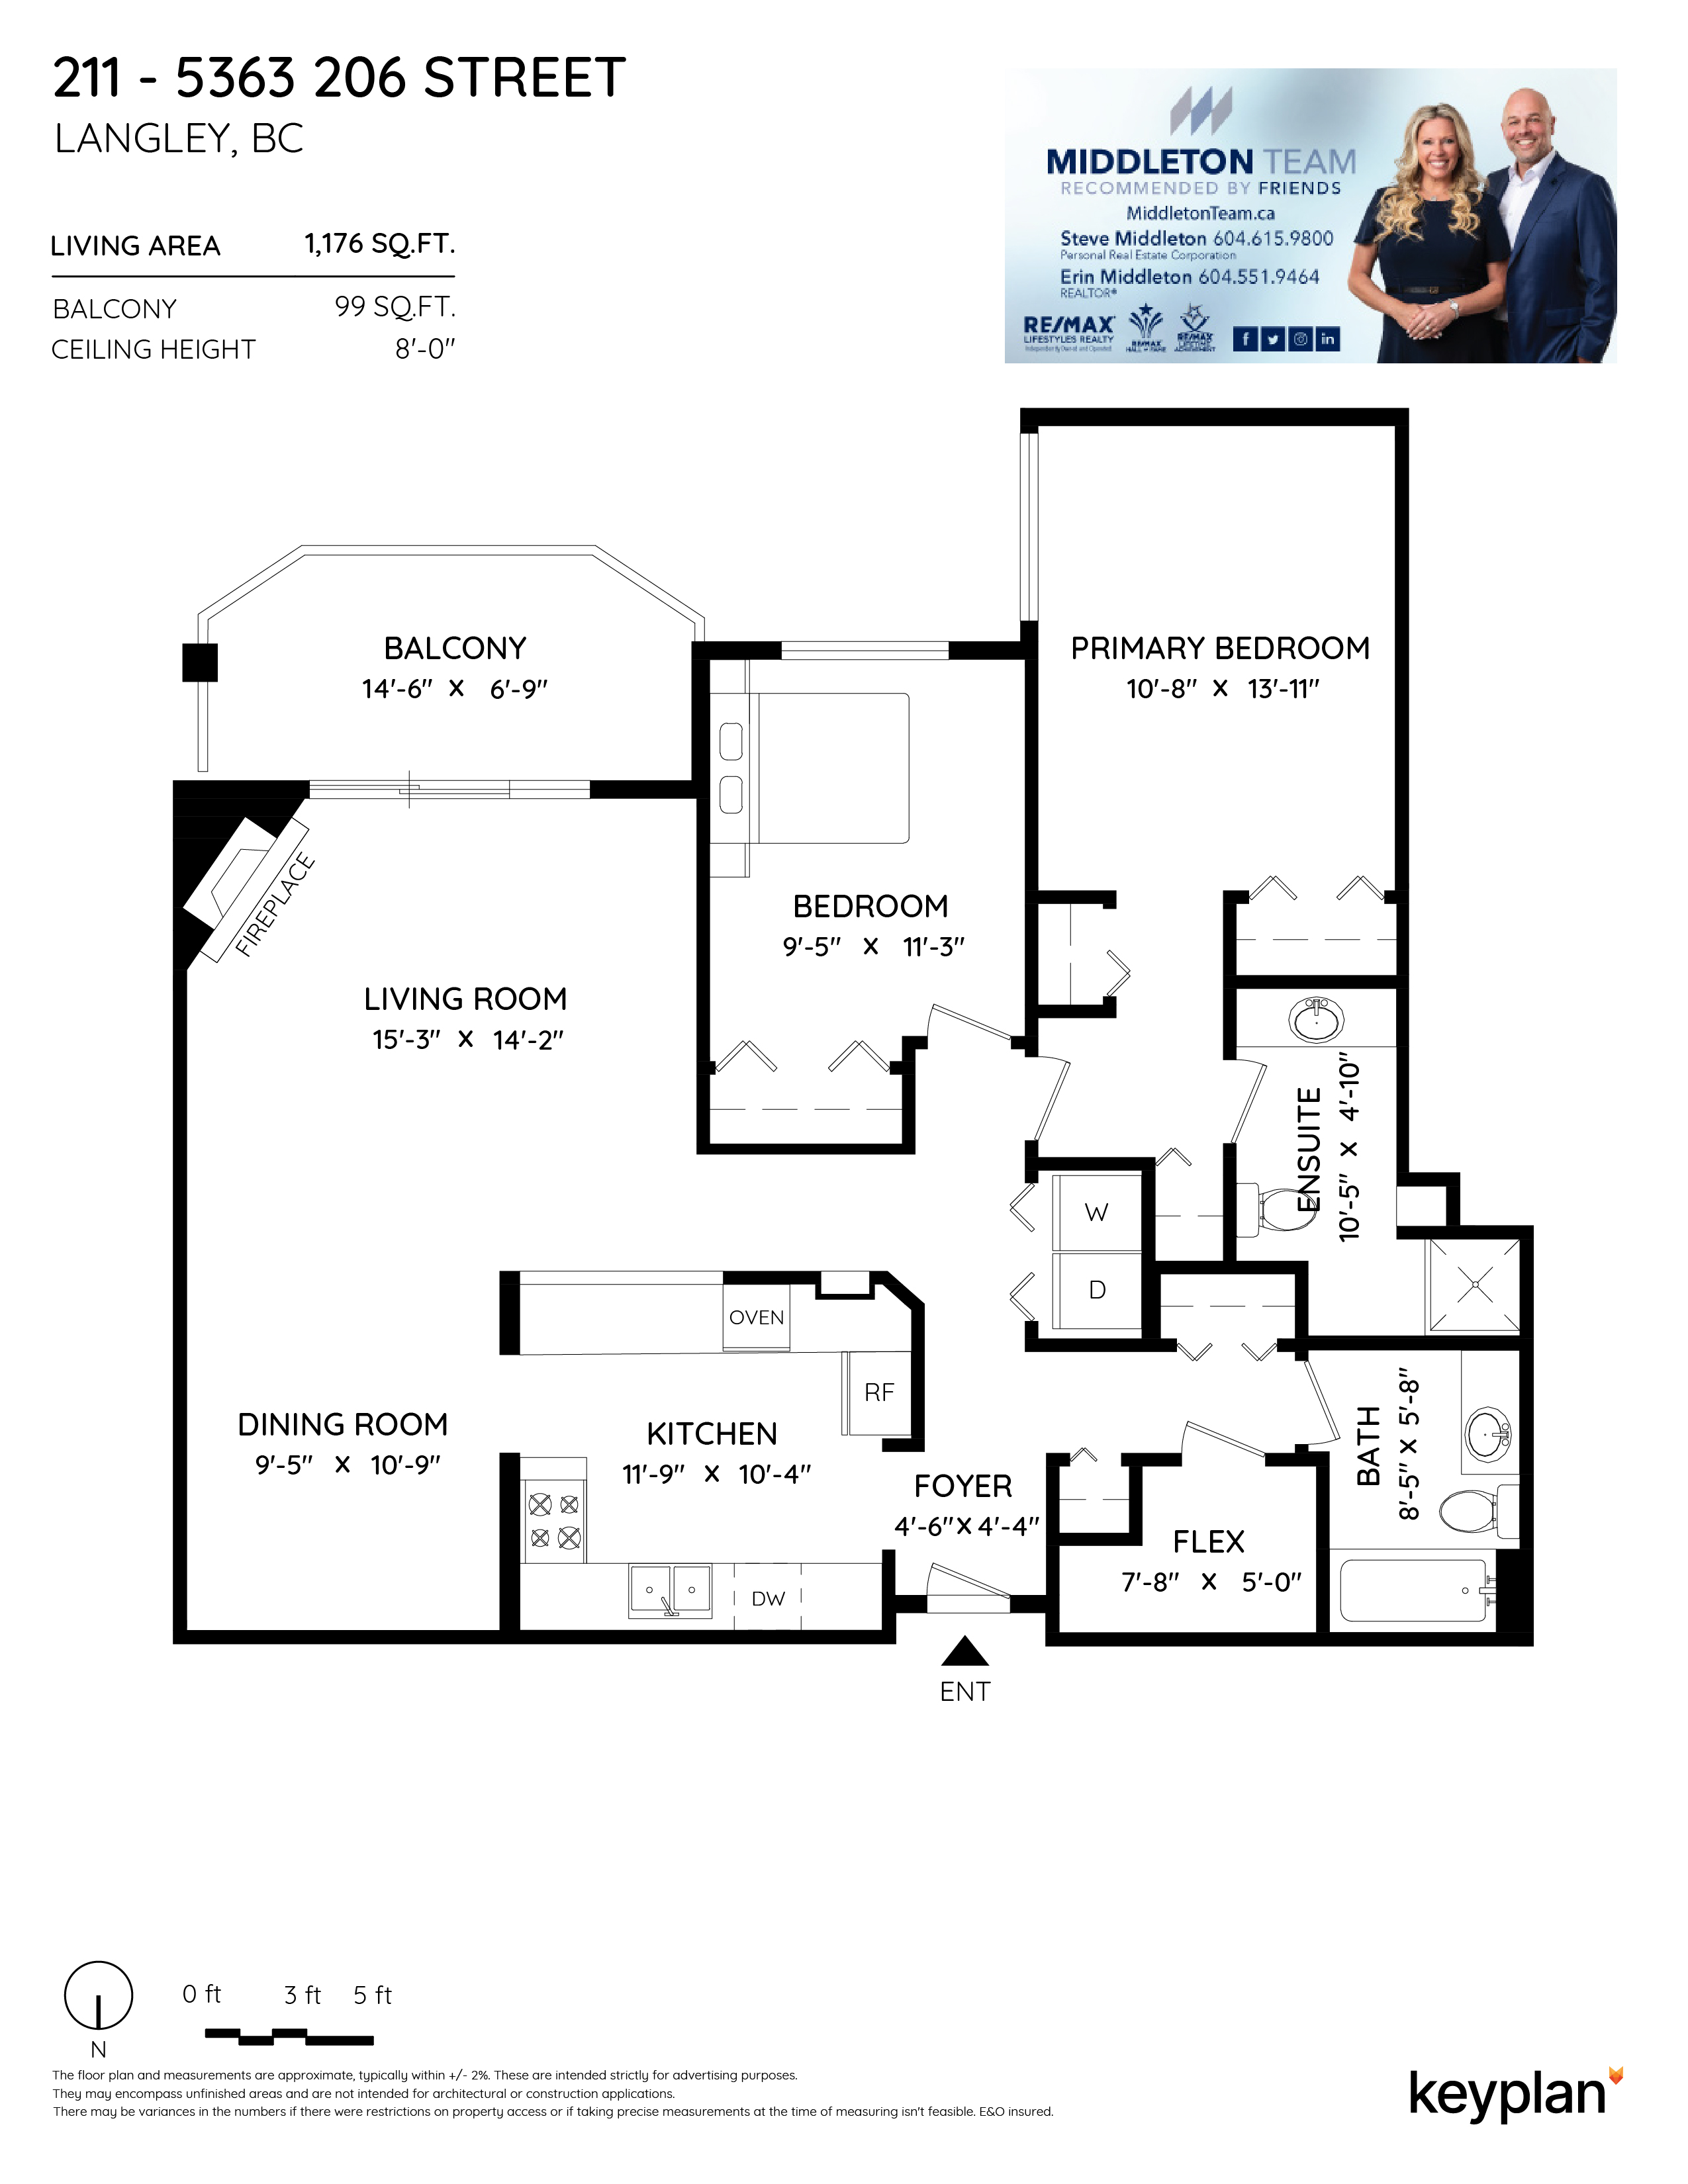 Steve & Erin Middleton - Unit 211 - 5363 206 Street, Langley, BC, Canada | Floor Plan 1